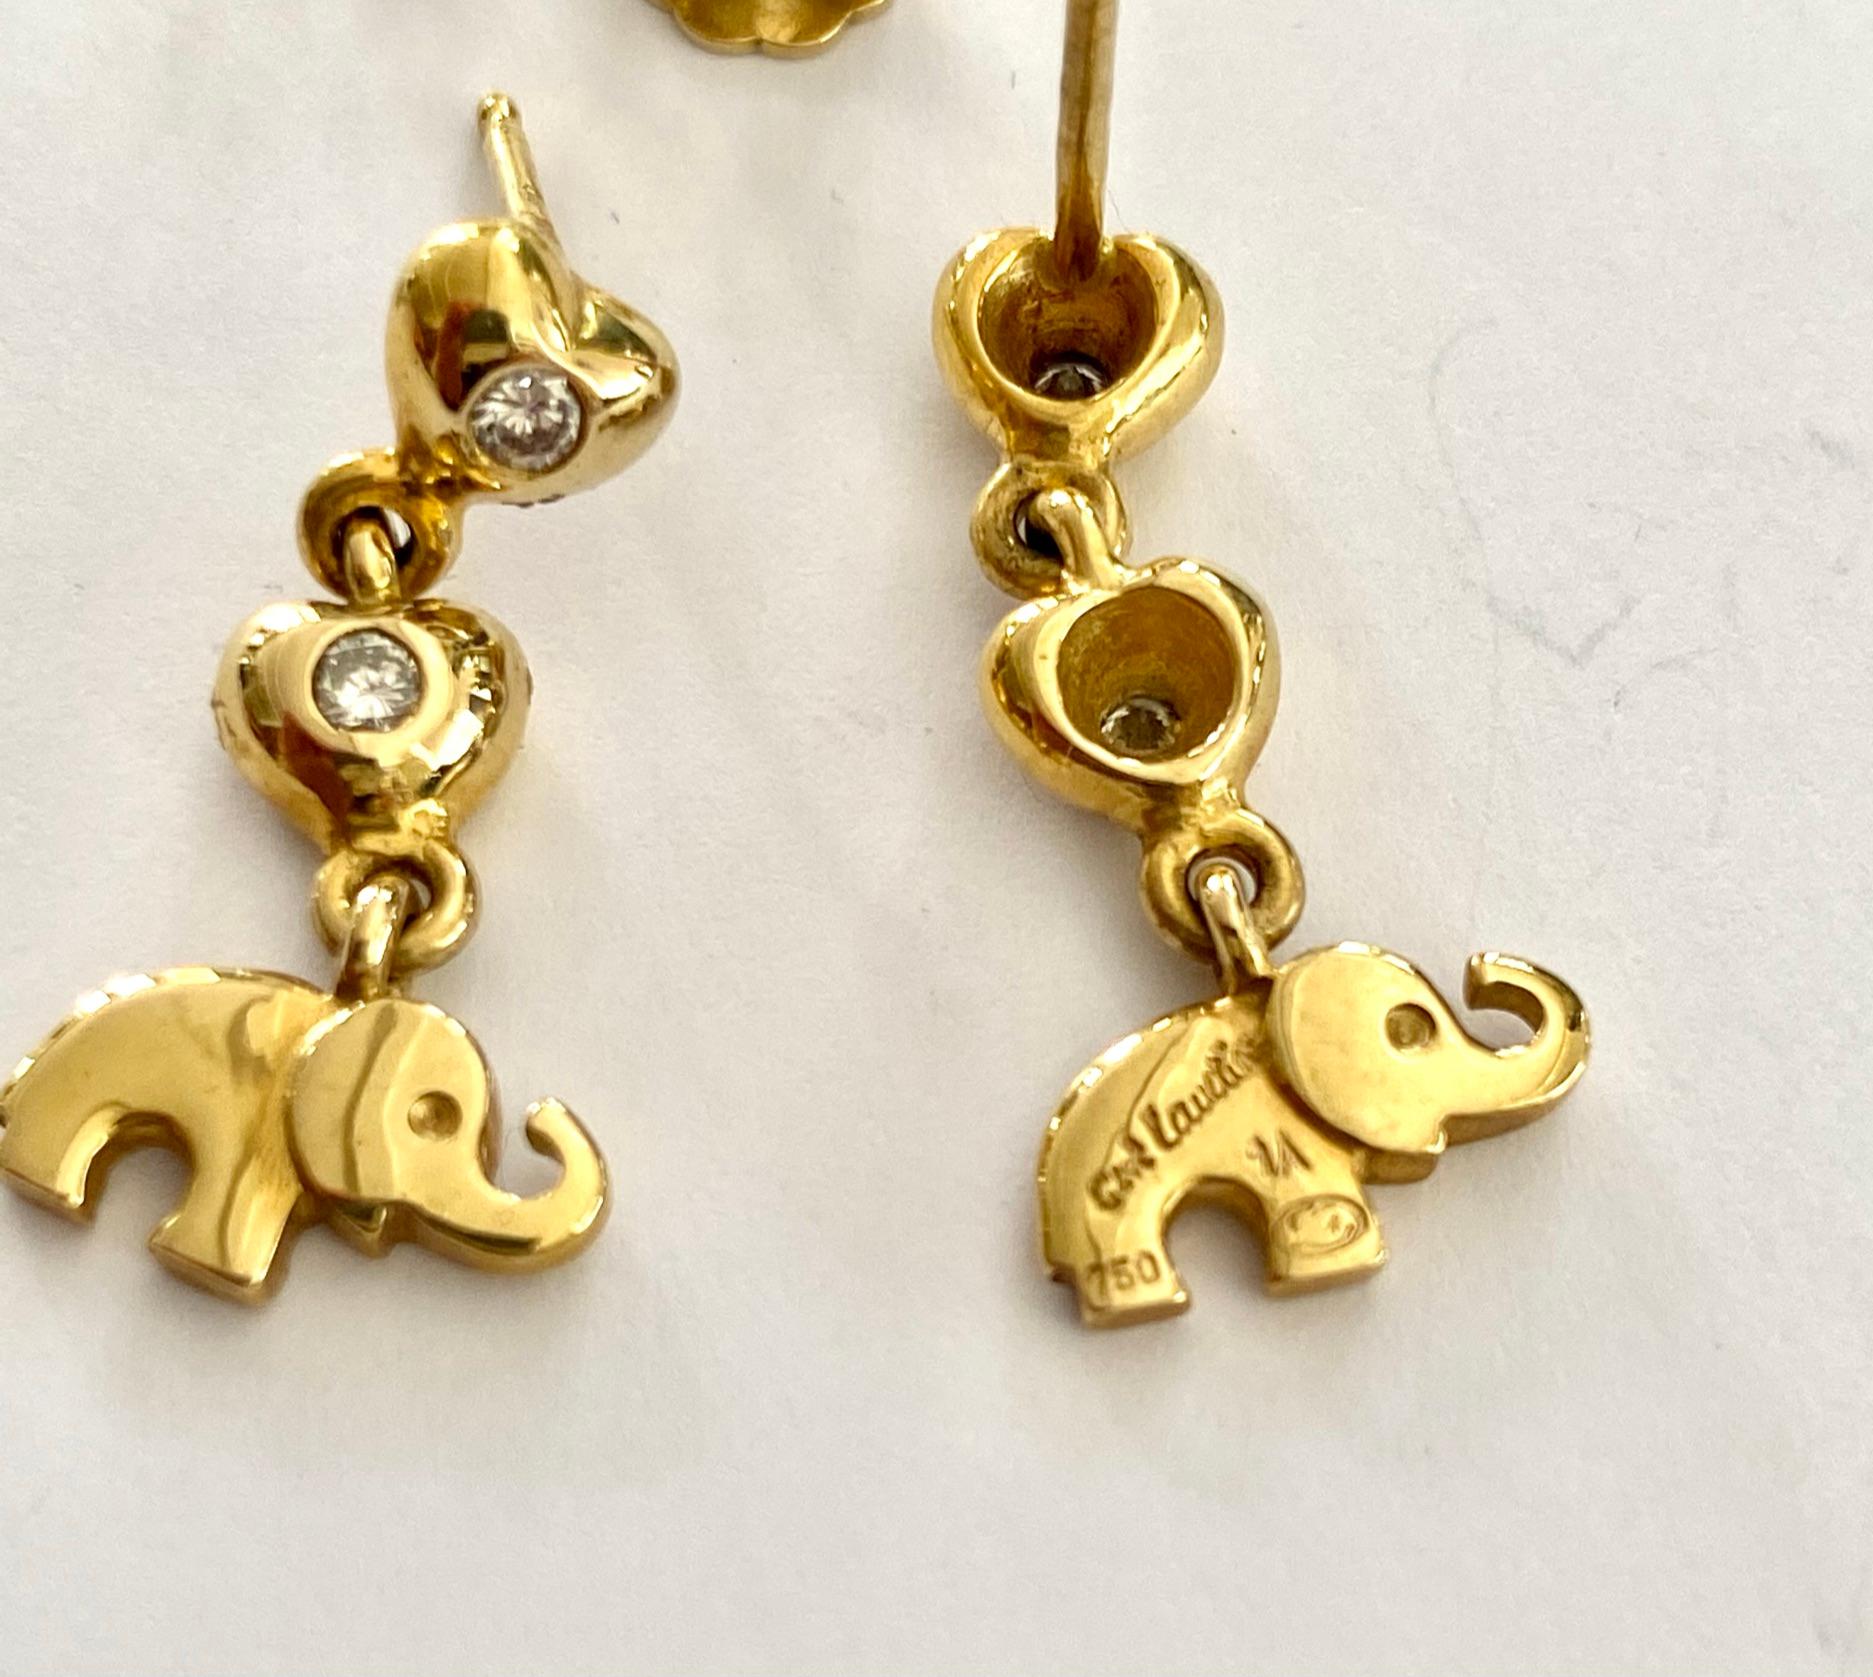 Brilliant Cut Elephant Earrings, Signed: 